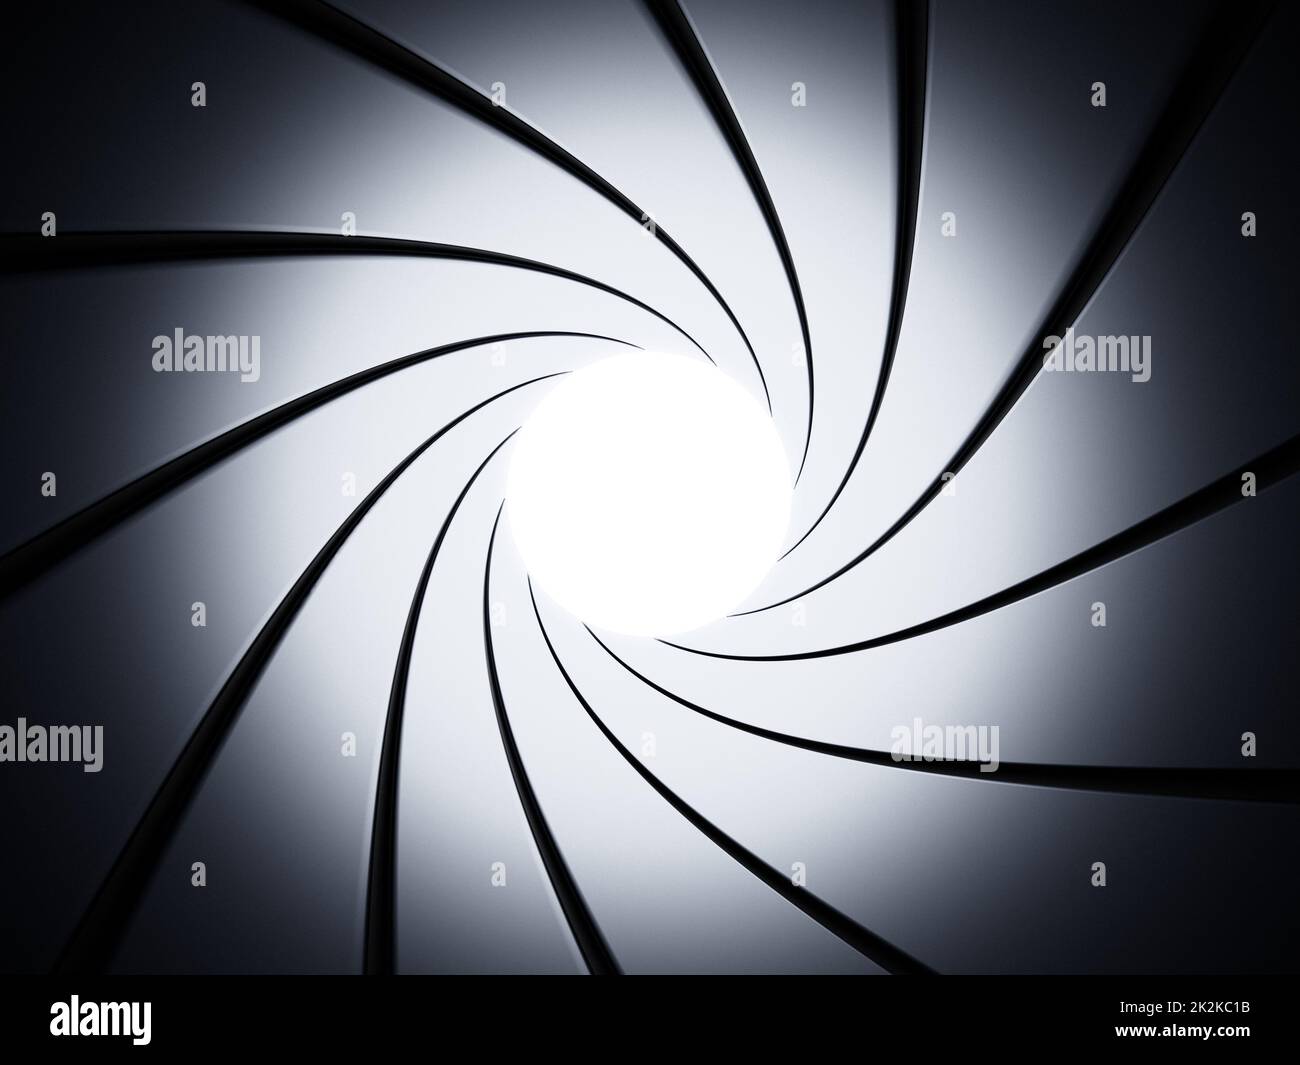 Swirling gun barrel background. Gray color tones. 3D illustration Stock Photo